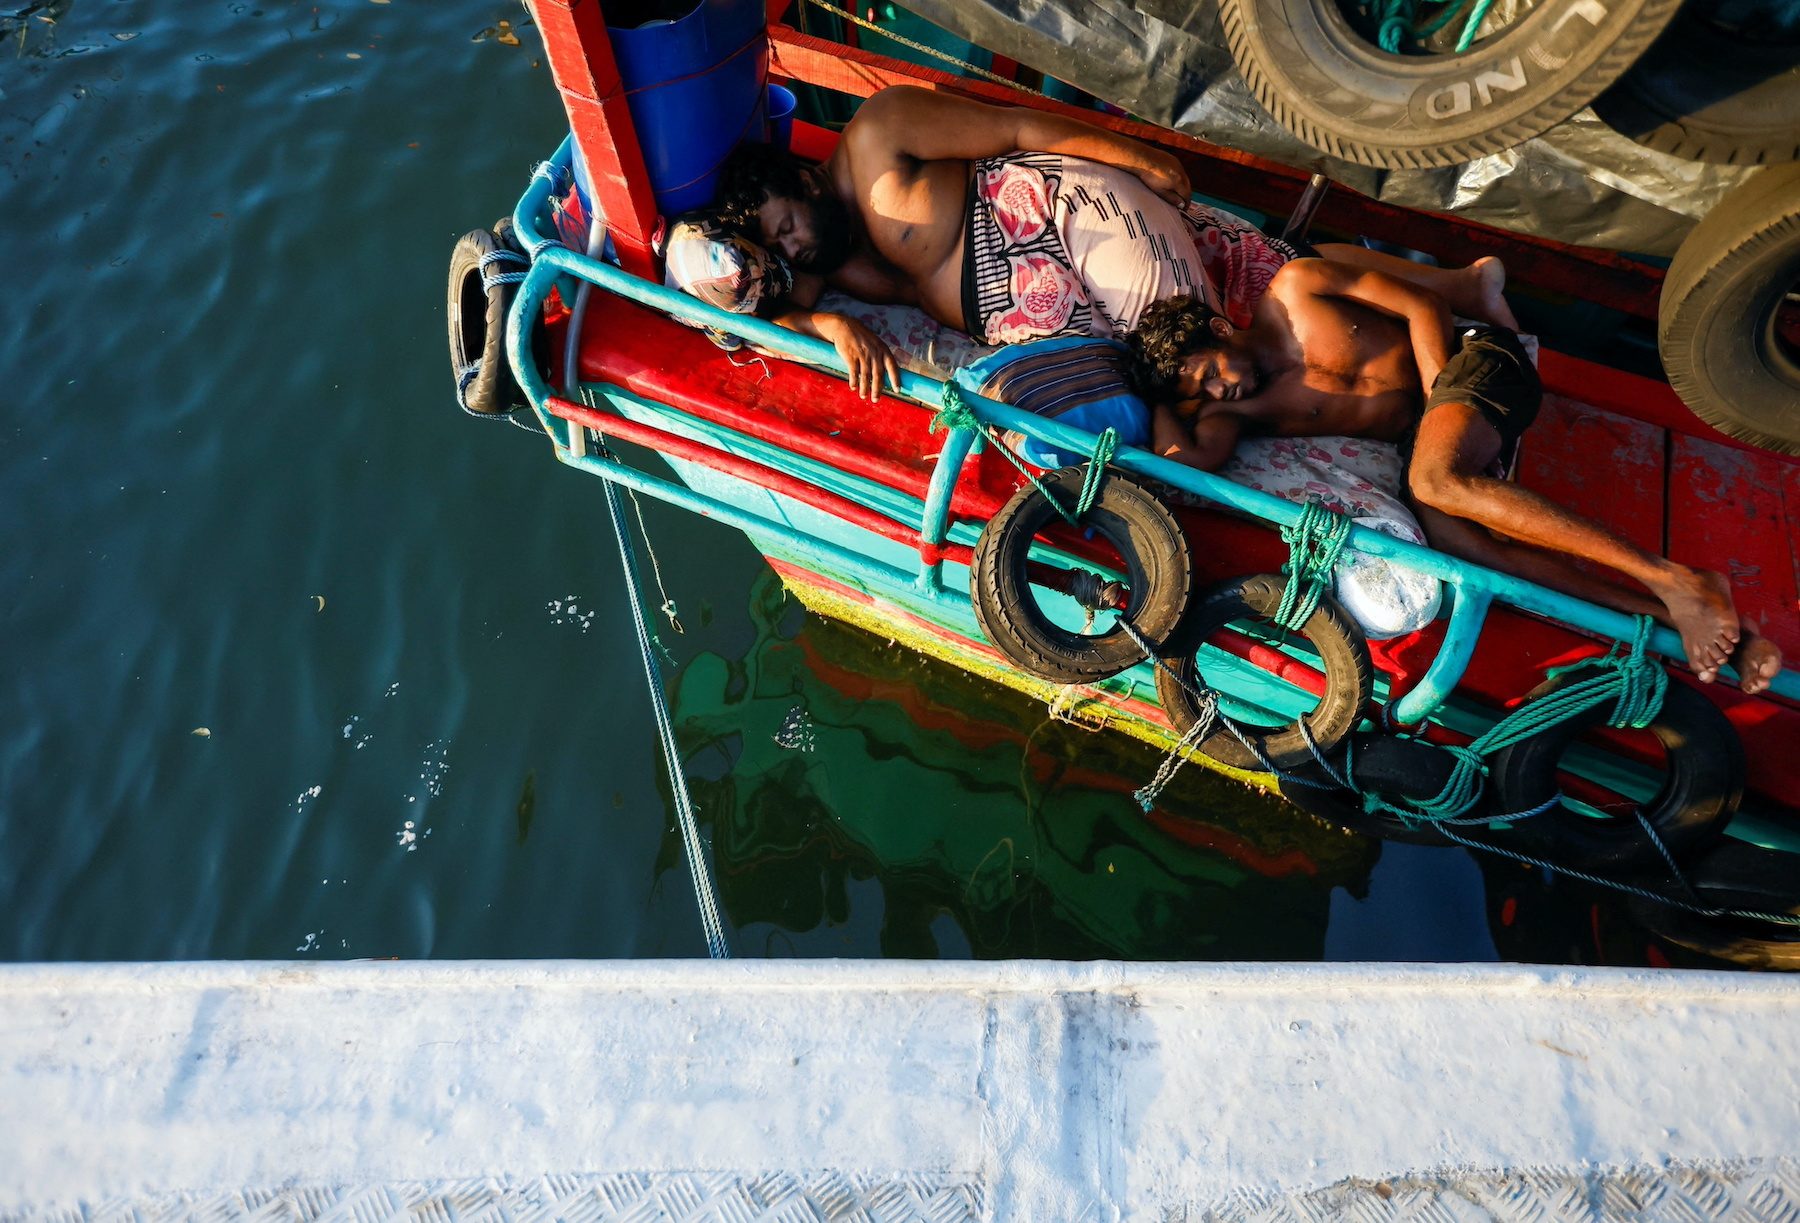 Life ‘very hard’ for Sri Lanka fishermen in financial squall